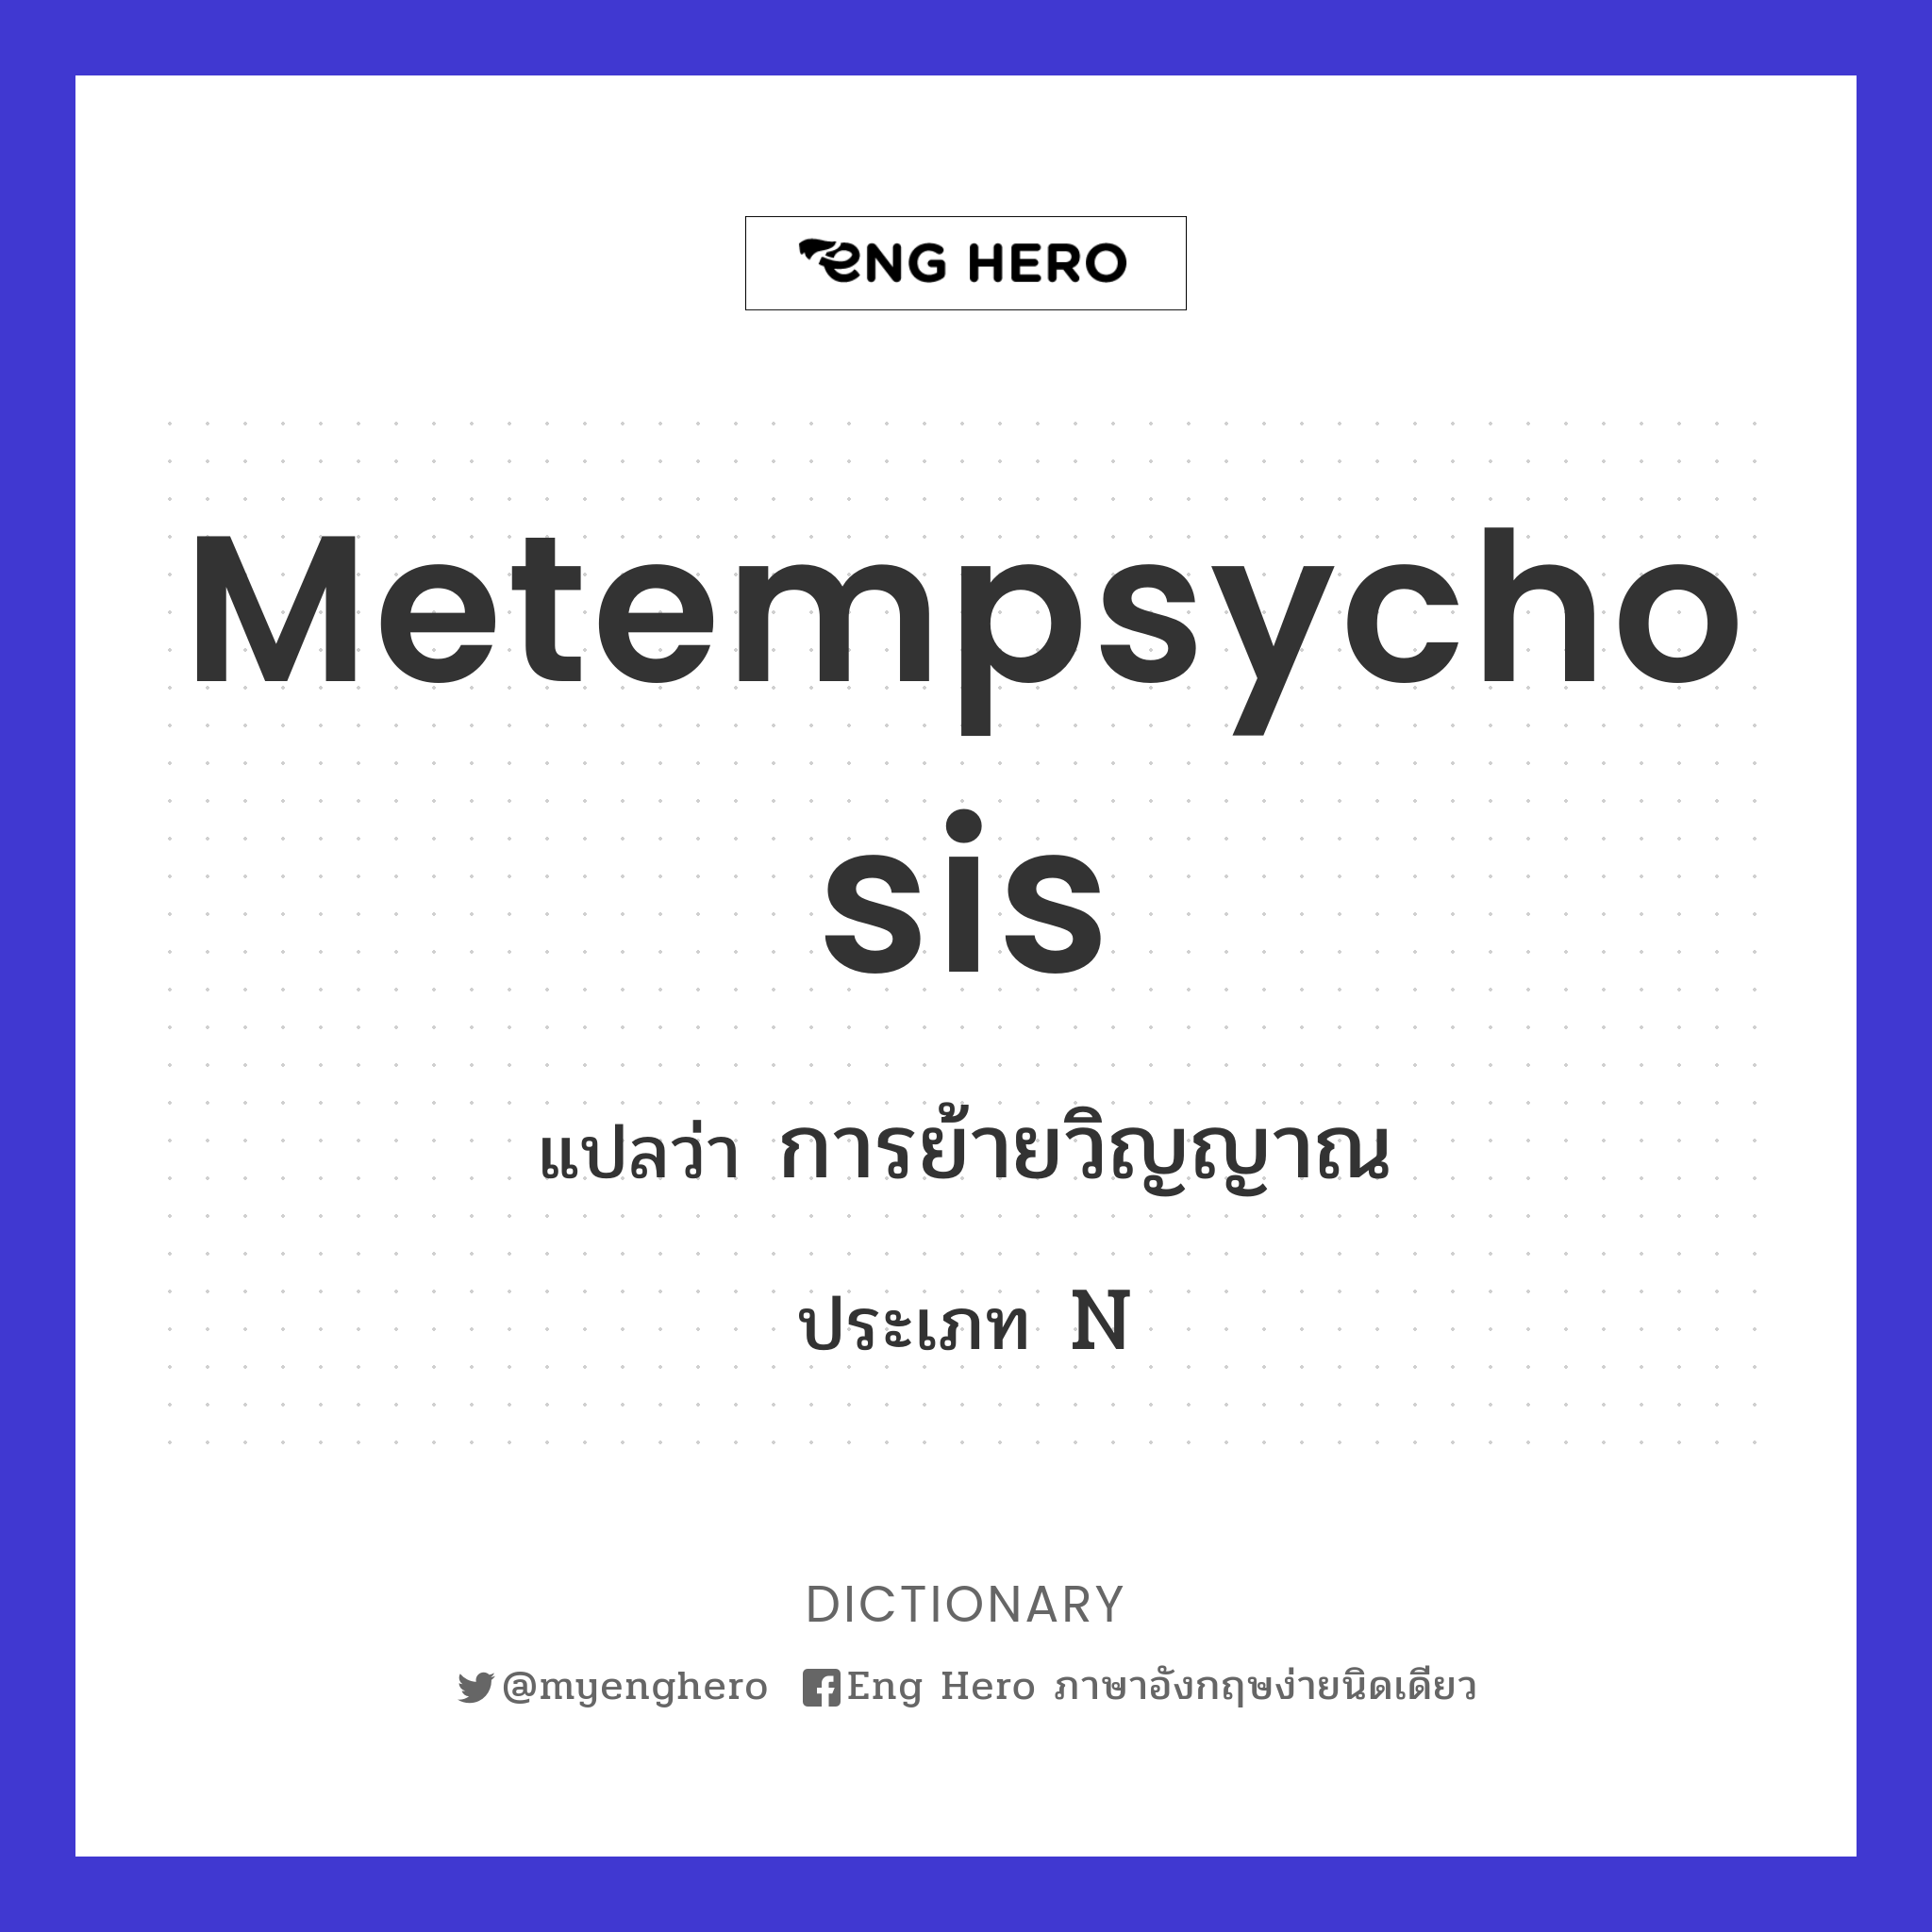 metempsychosis